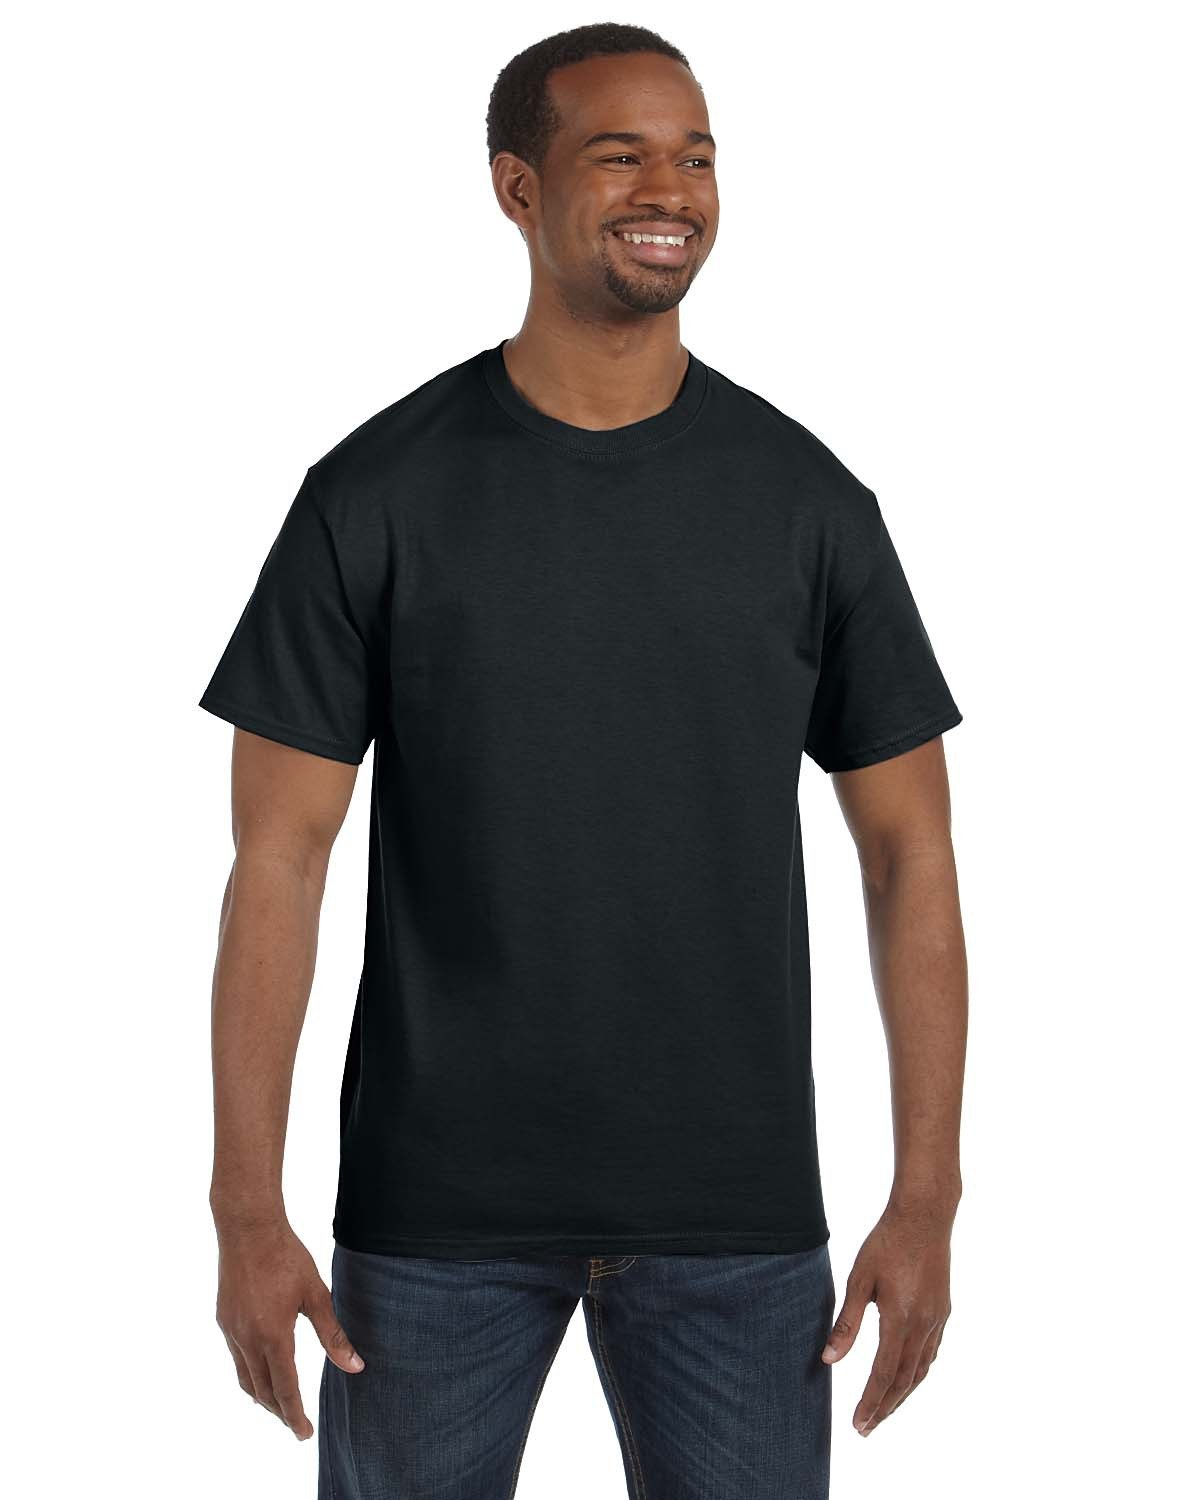 Jerzees 29M Adult 5.6 oz. DRI-POWER® ACTIVE T-Shirt - Black - L